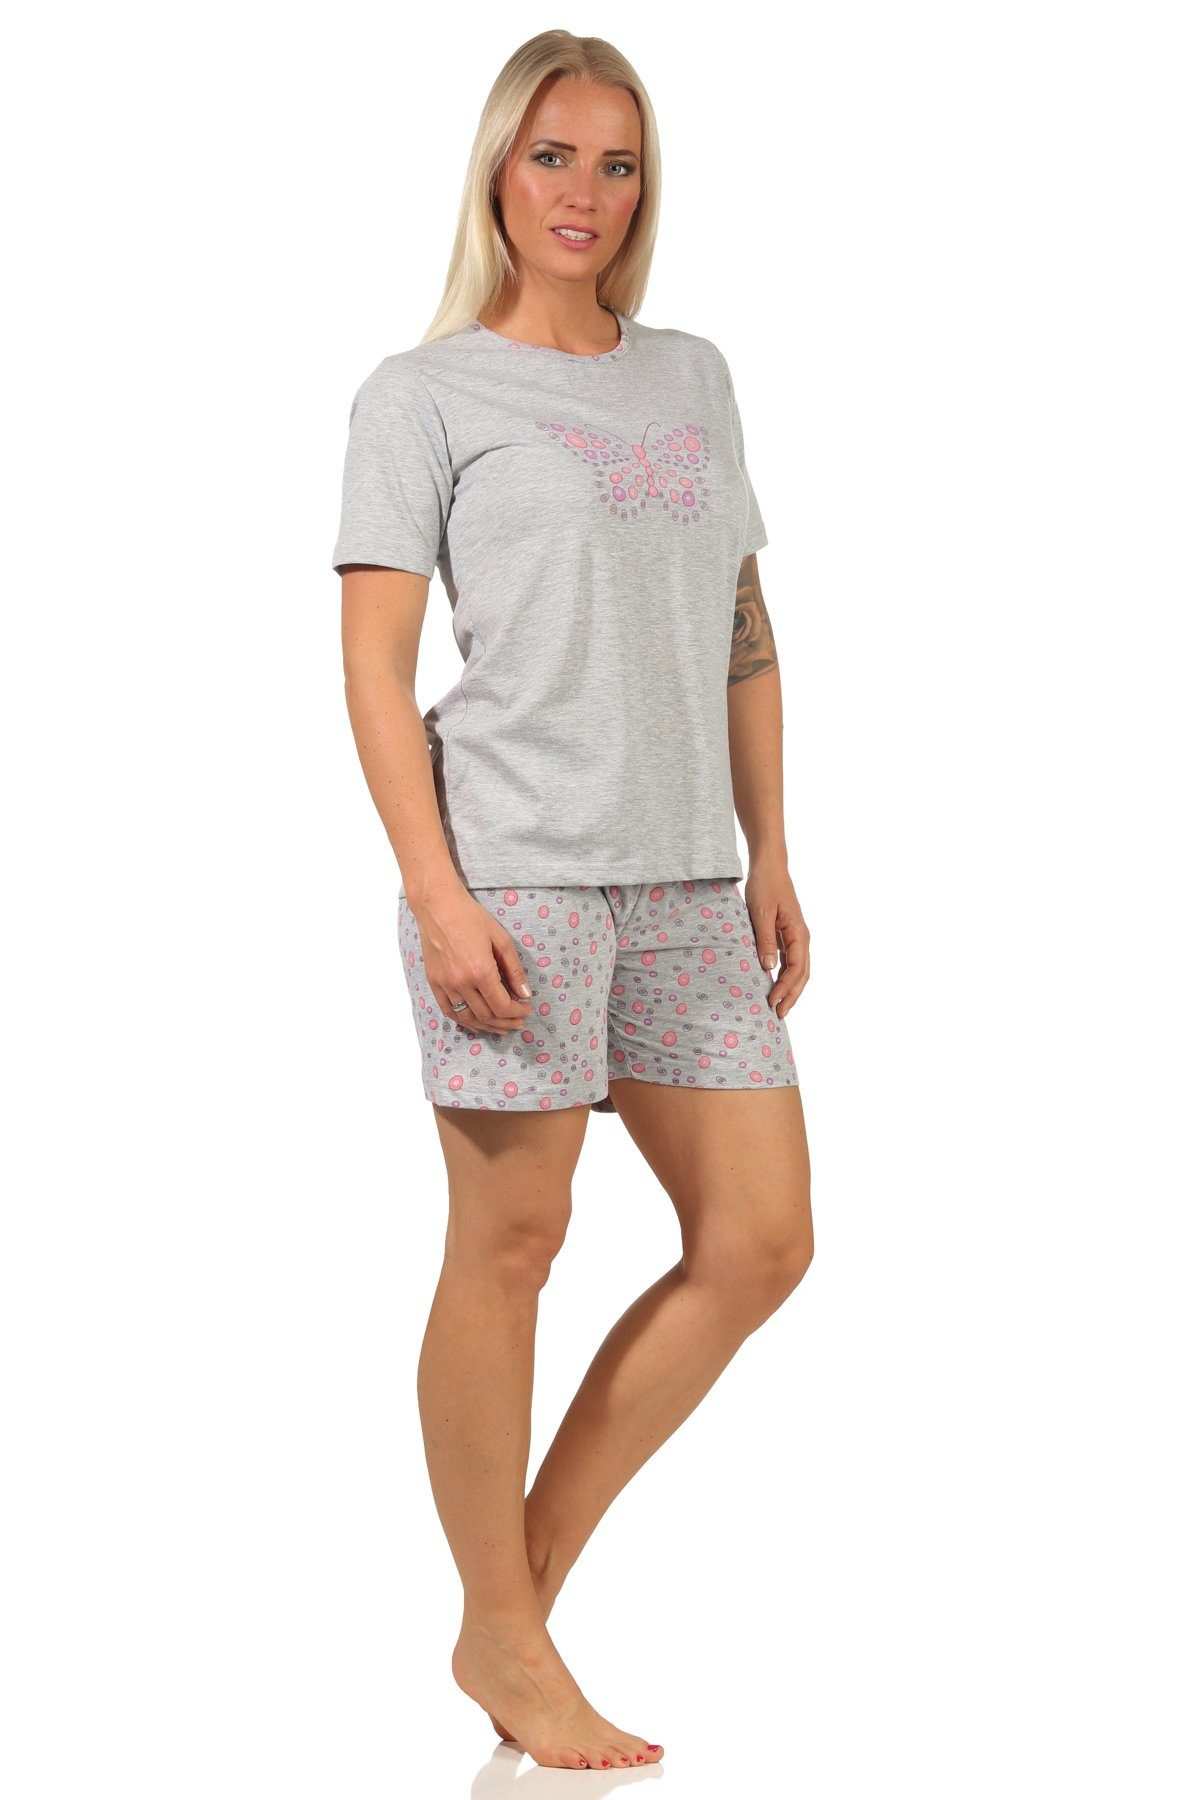 RELAX by Normann Shorty Damen Schmetterling-Motiv kurzarm pink Pyjama Schlafanzug, Pyjama mit